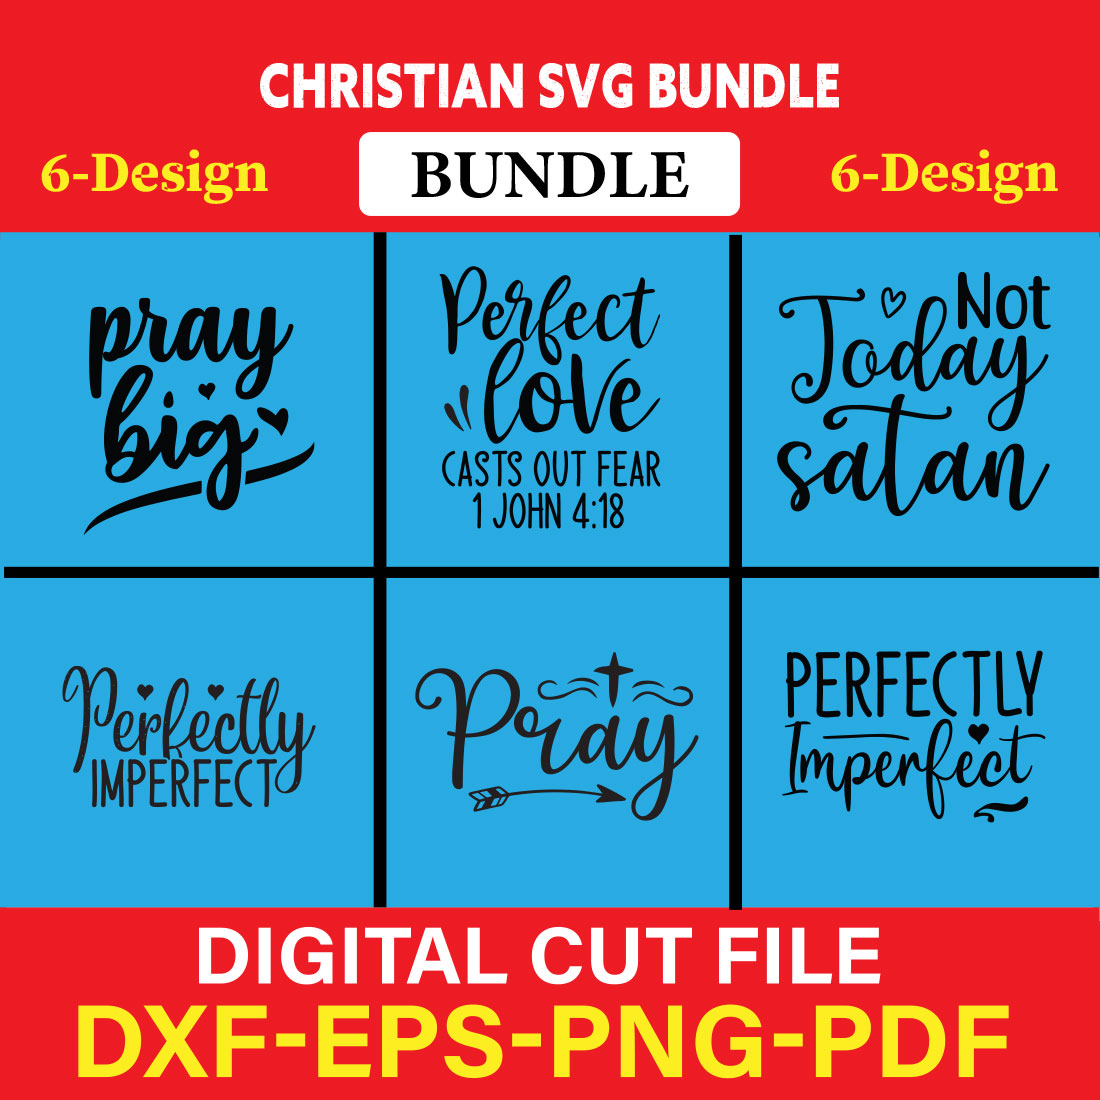 Christian T-shirt Design Bundle Vol-19 cover image.